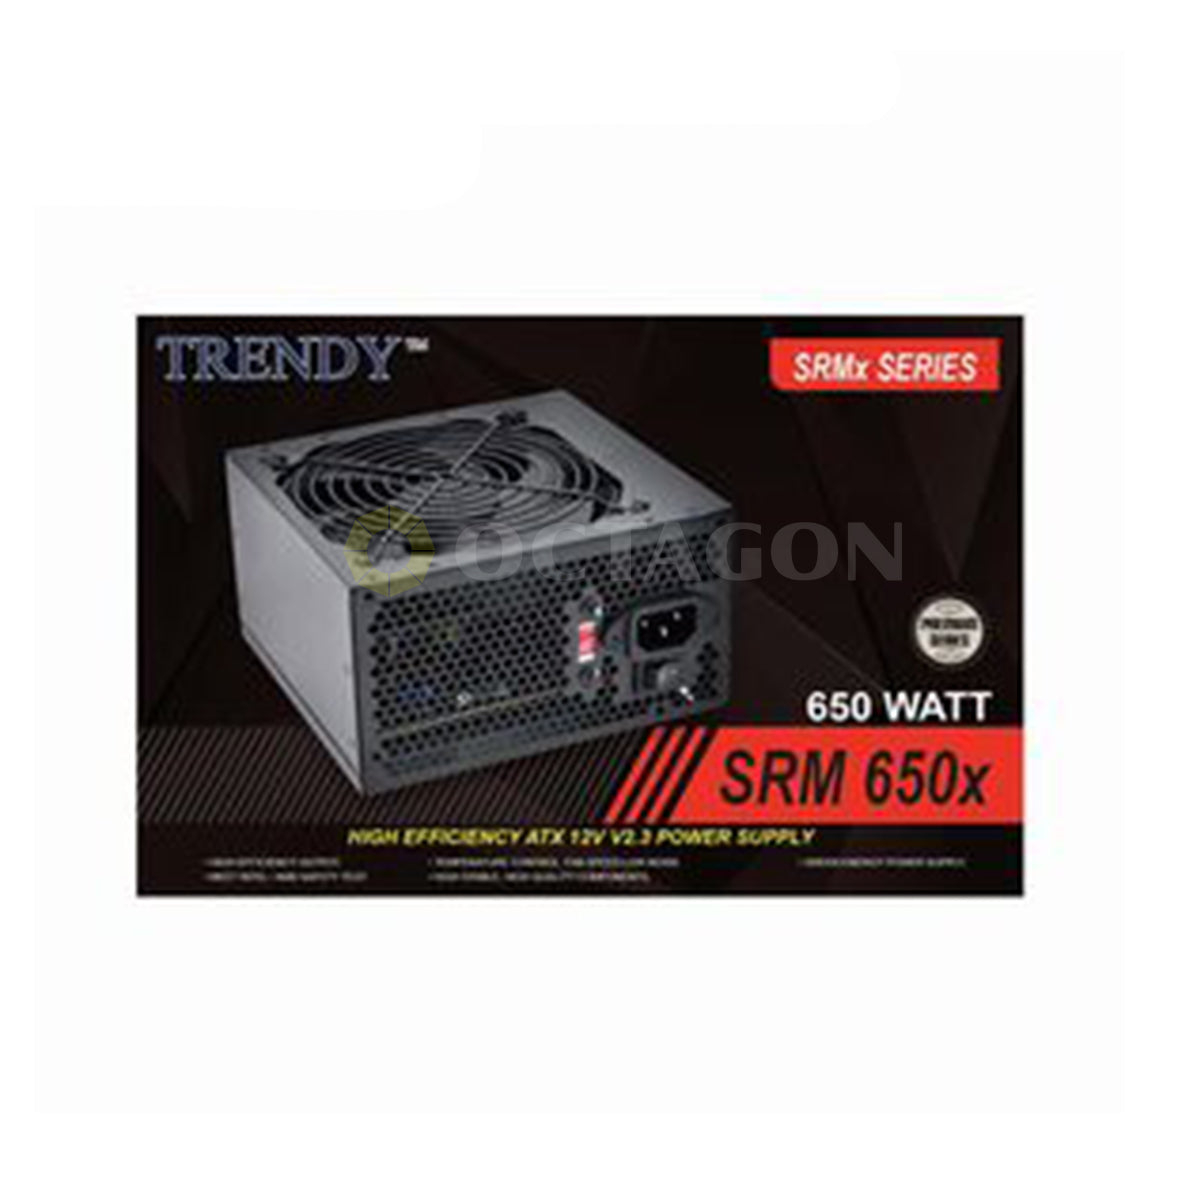 TRENDY SRM 650X 650 WATT POWER SUPPLY